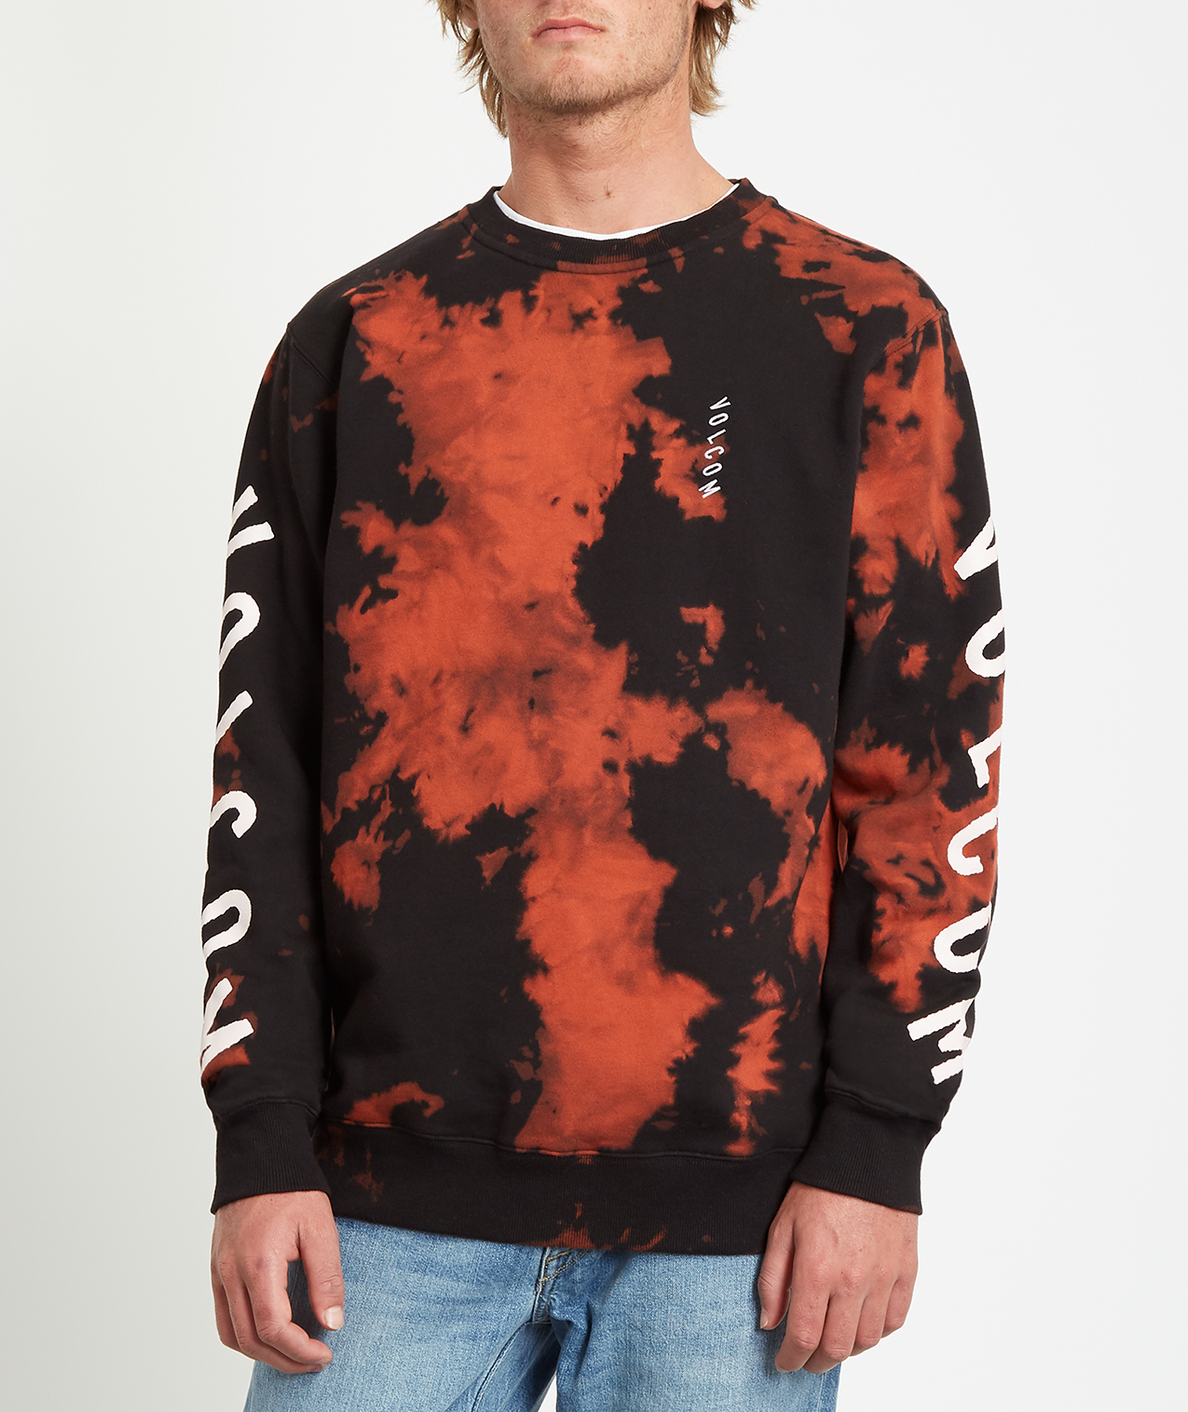 Merick Sweater - NEW BLACK